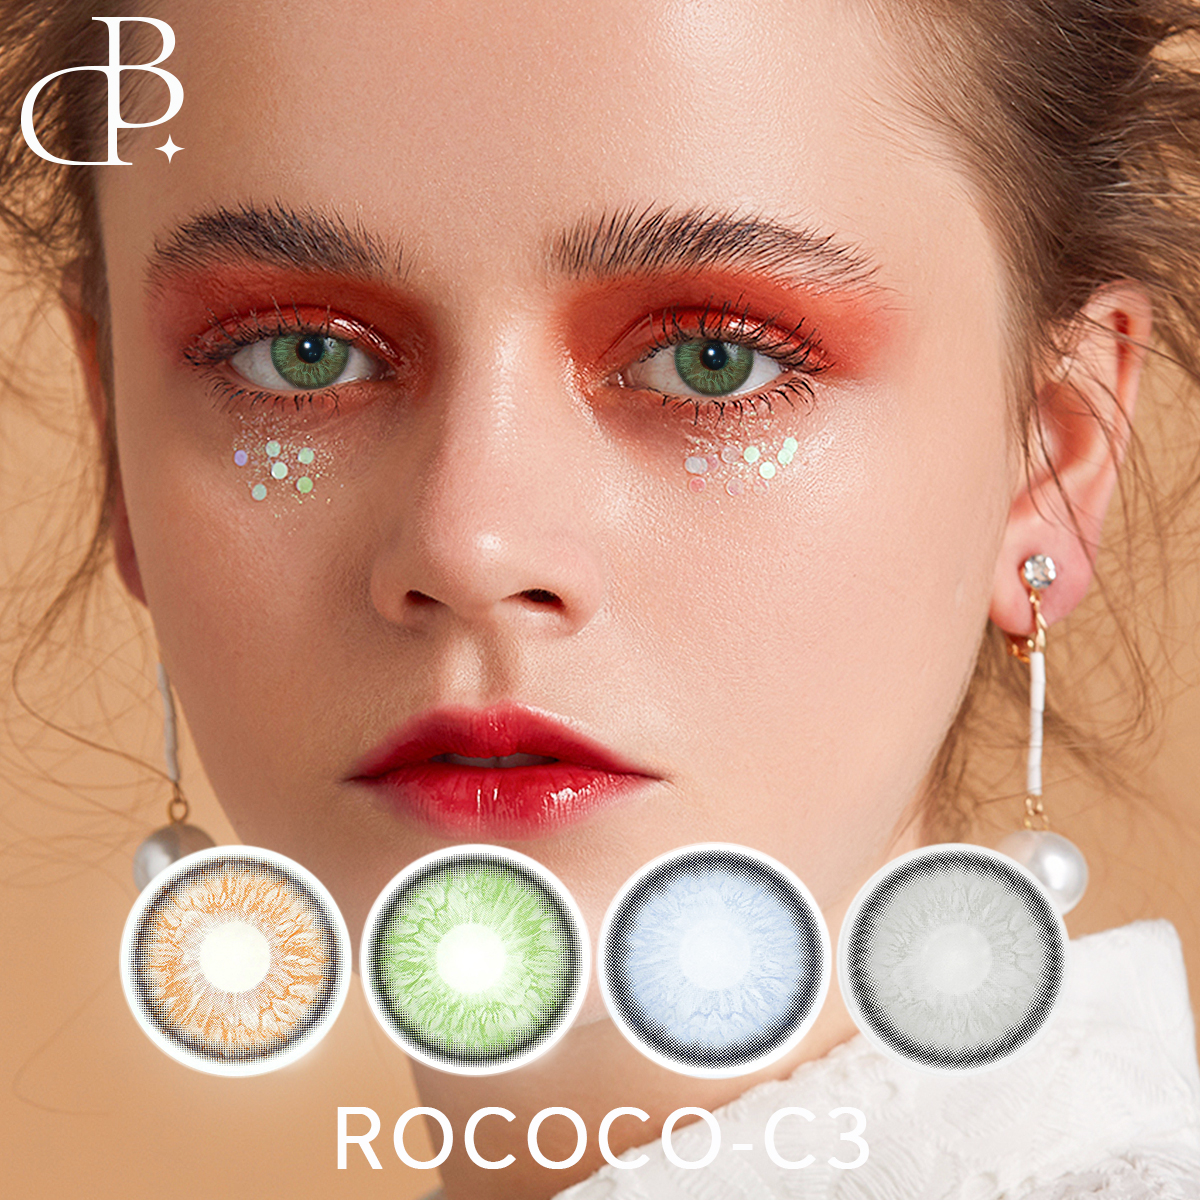 I-ROCOCO-3 uchungechunge unyaka ongu-1 we-factory color color lens degree cosmetic colored eye contact lens anebhokisi